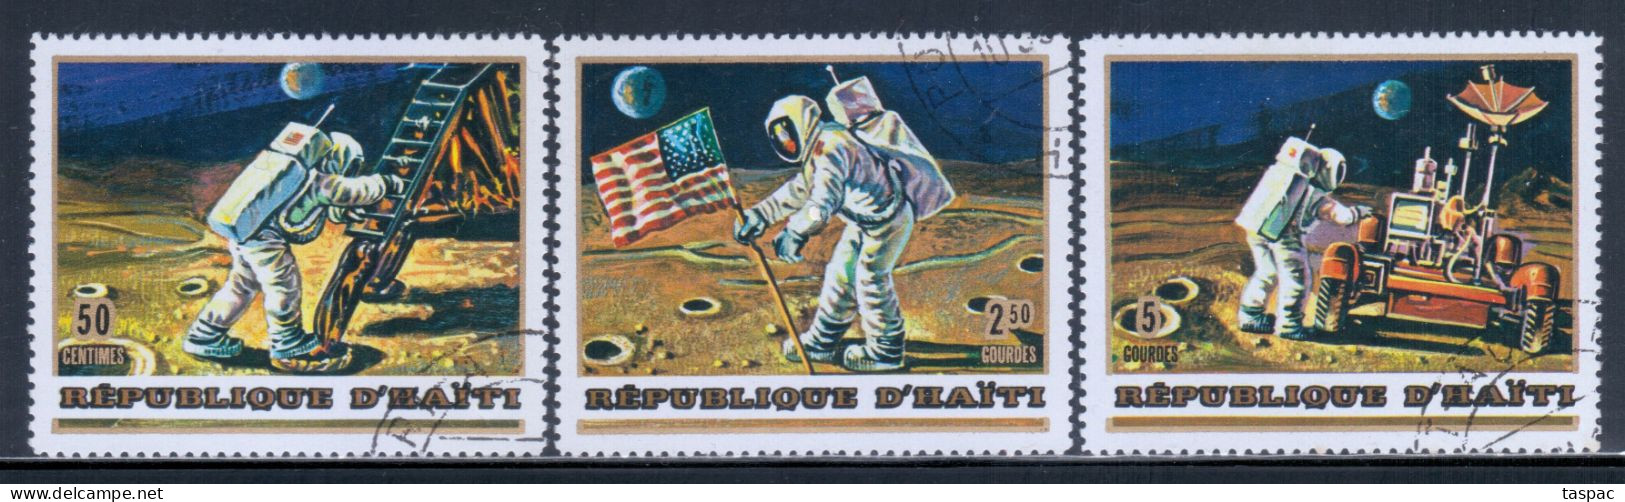 Haiti 1973 Mi# Not Listed - Unofficial Set Of 3 Used - Apollo / Space - Haïti